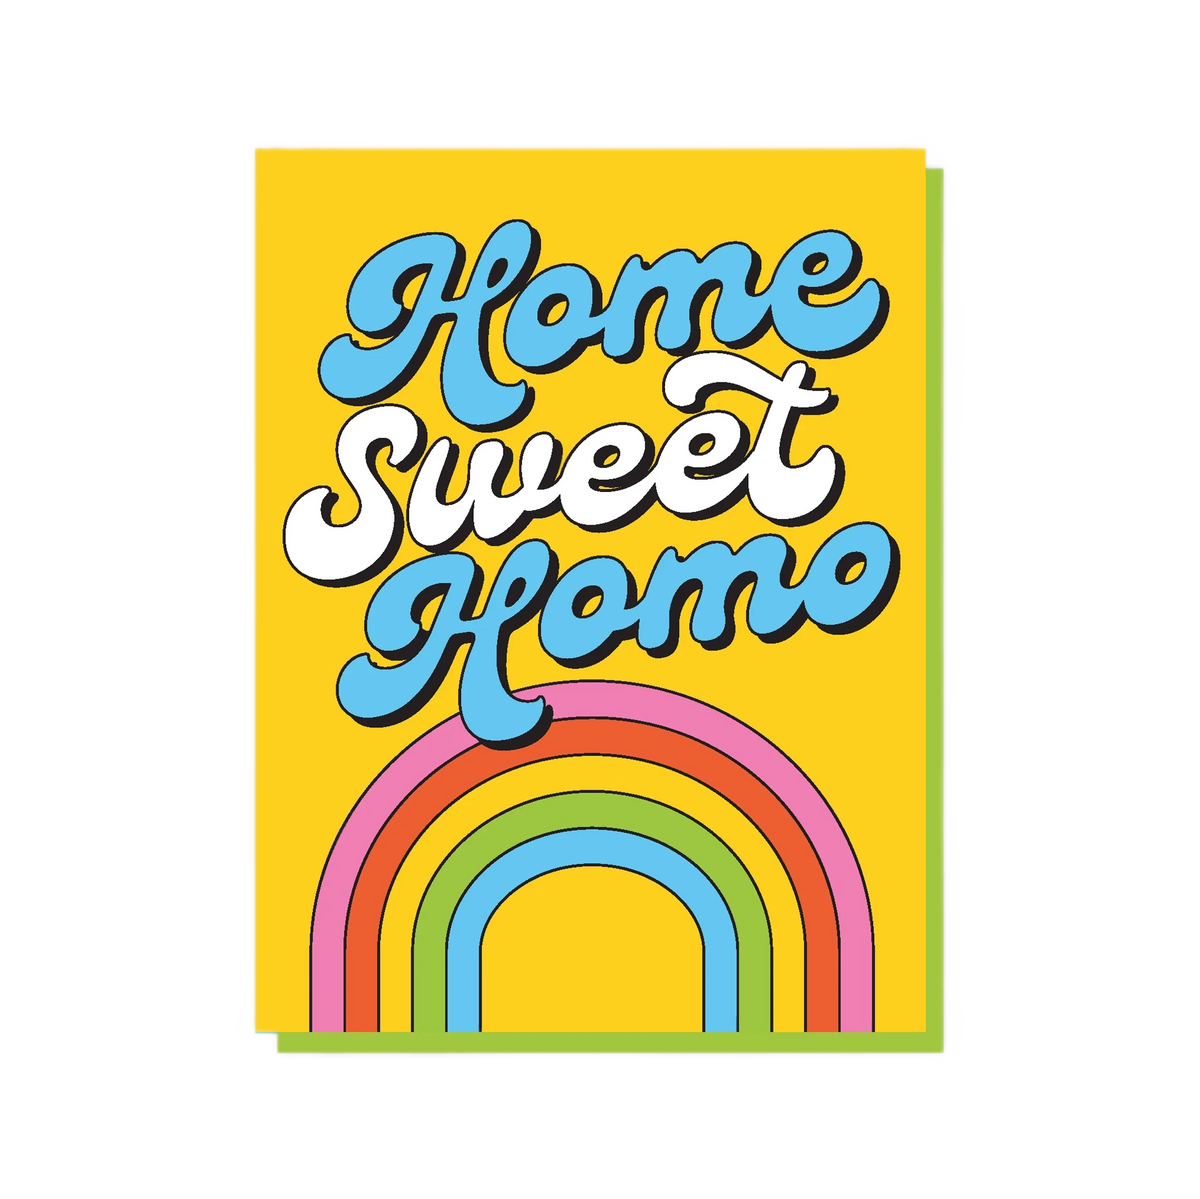 Home Sweet Homo Card